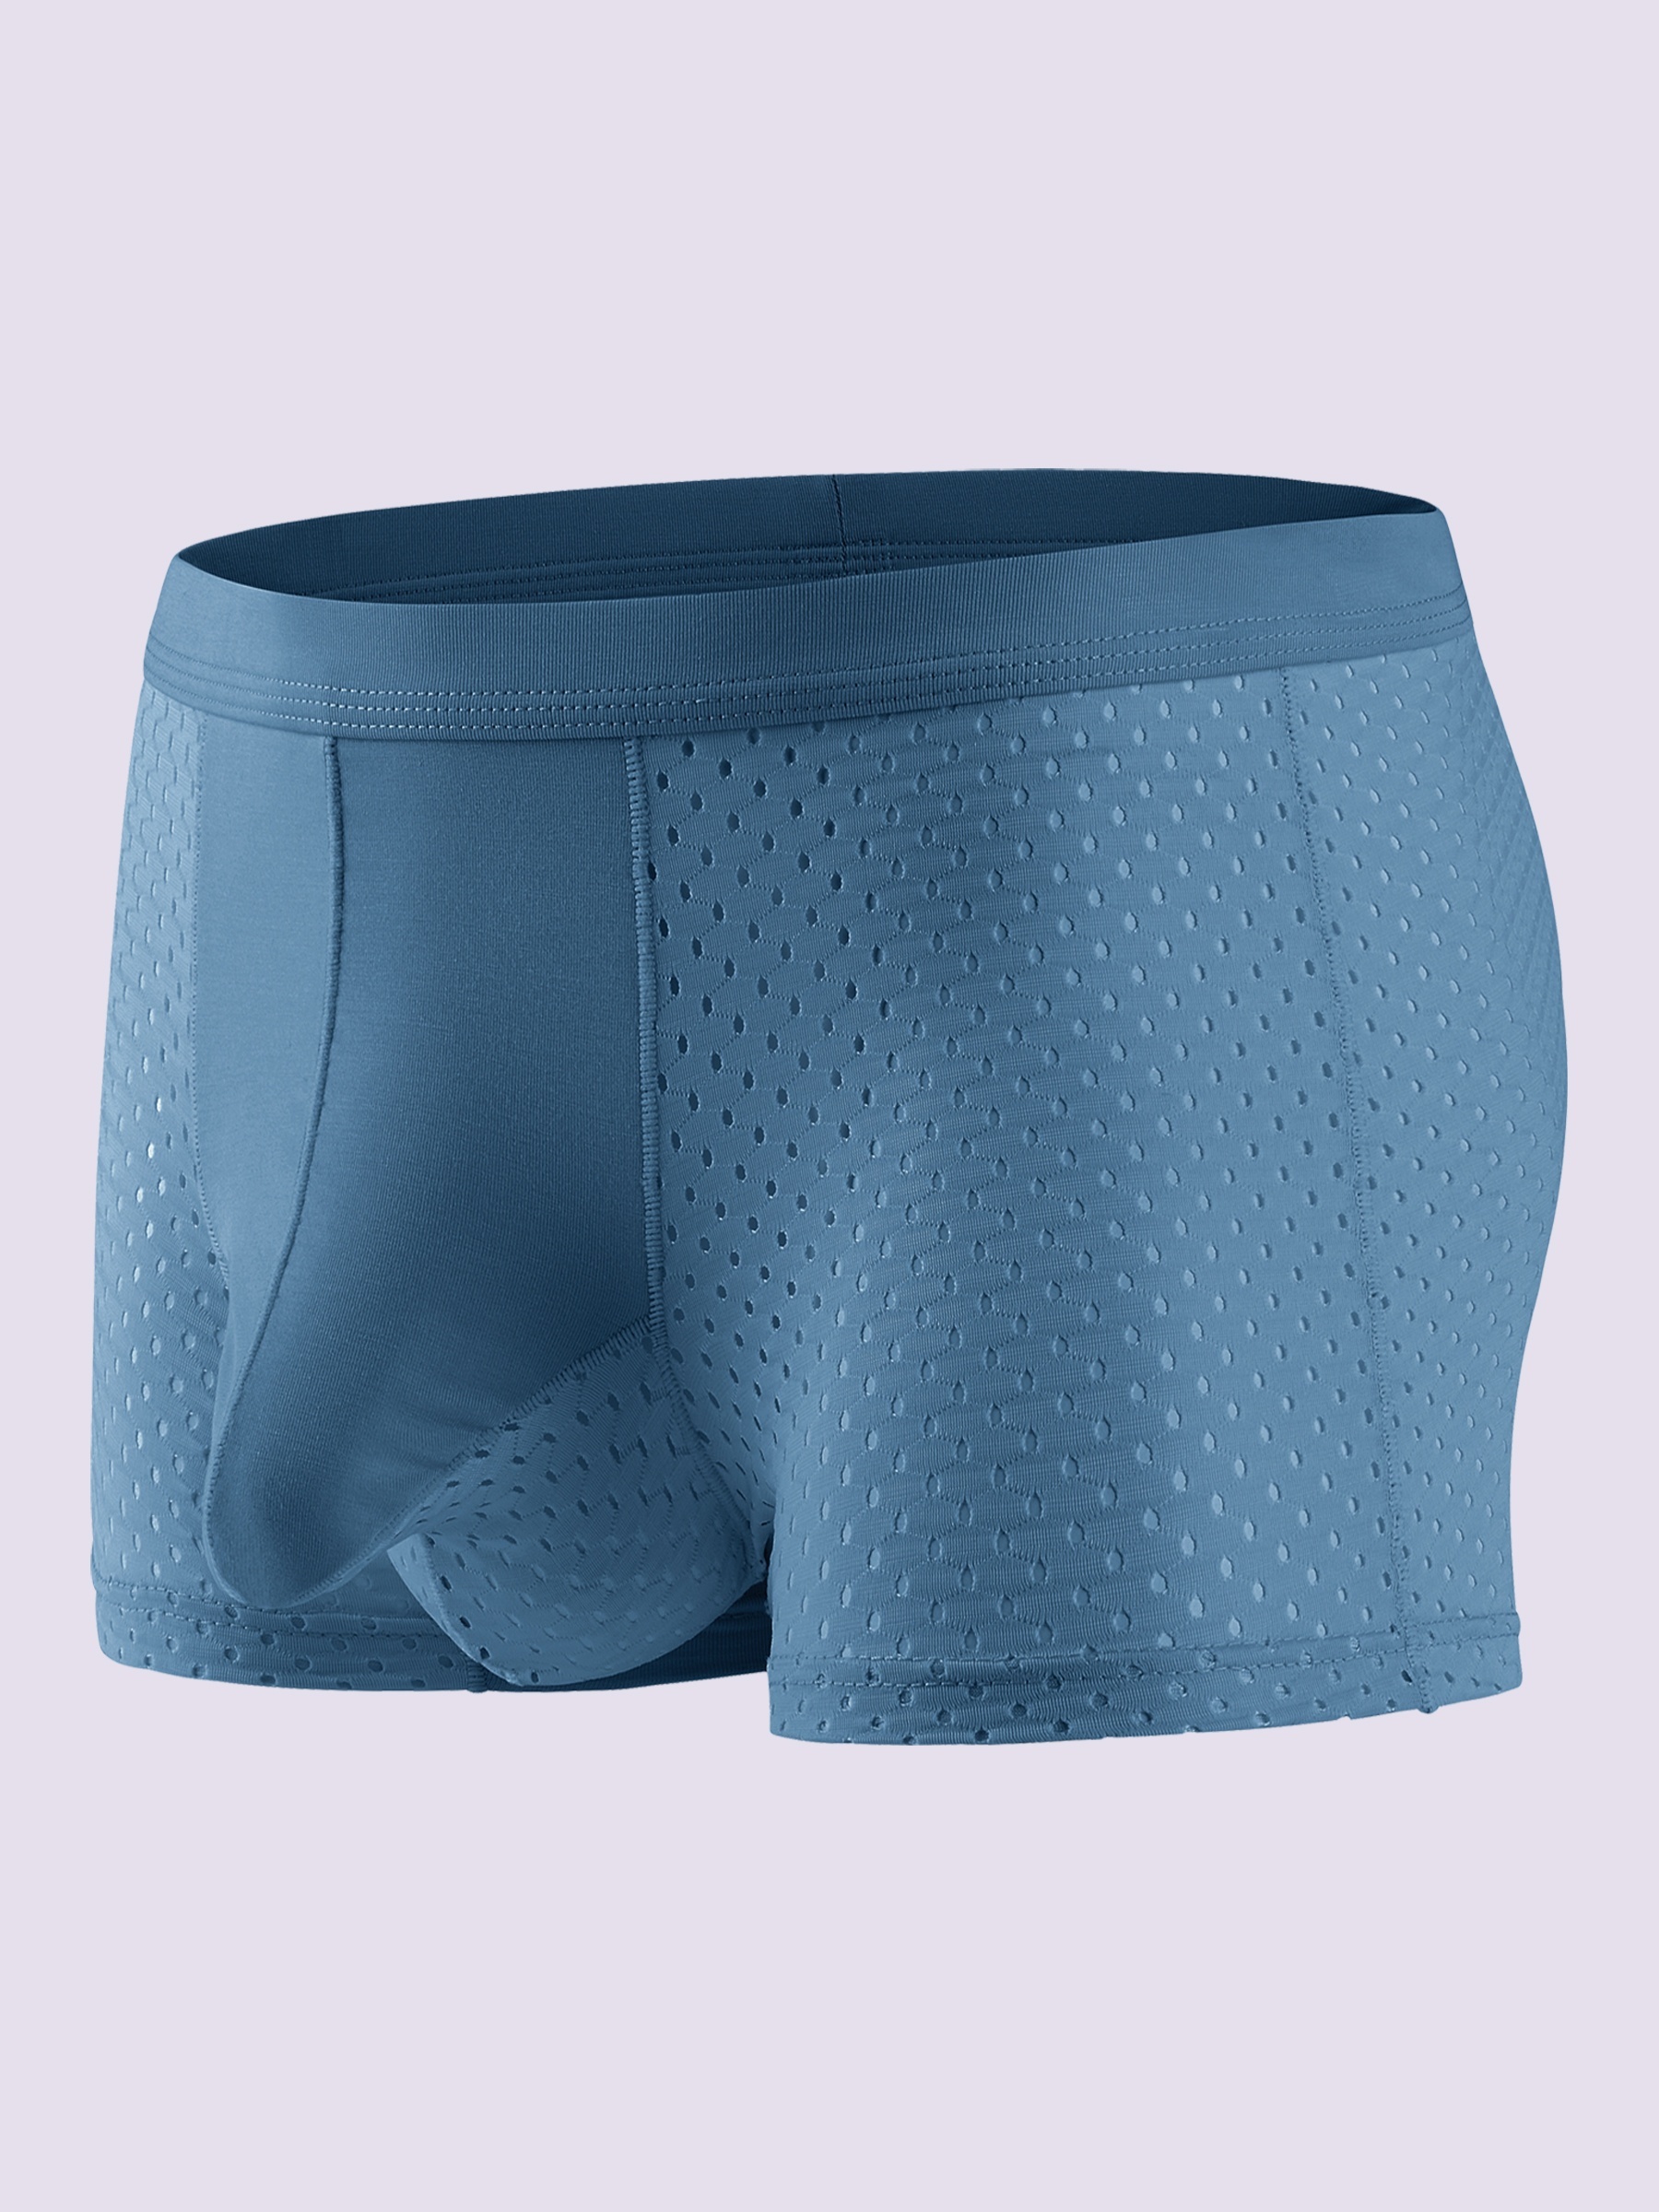 Modal Breathable Panties Men Boxers Elephant Trunk Underwear Daily  Undershorts